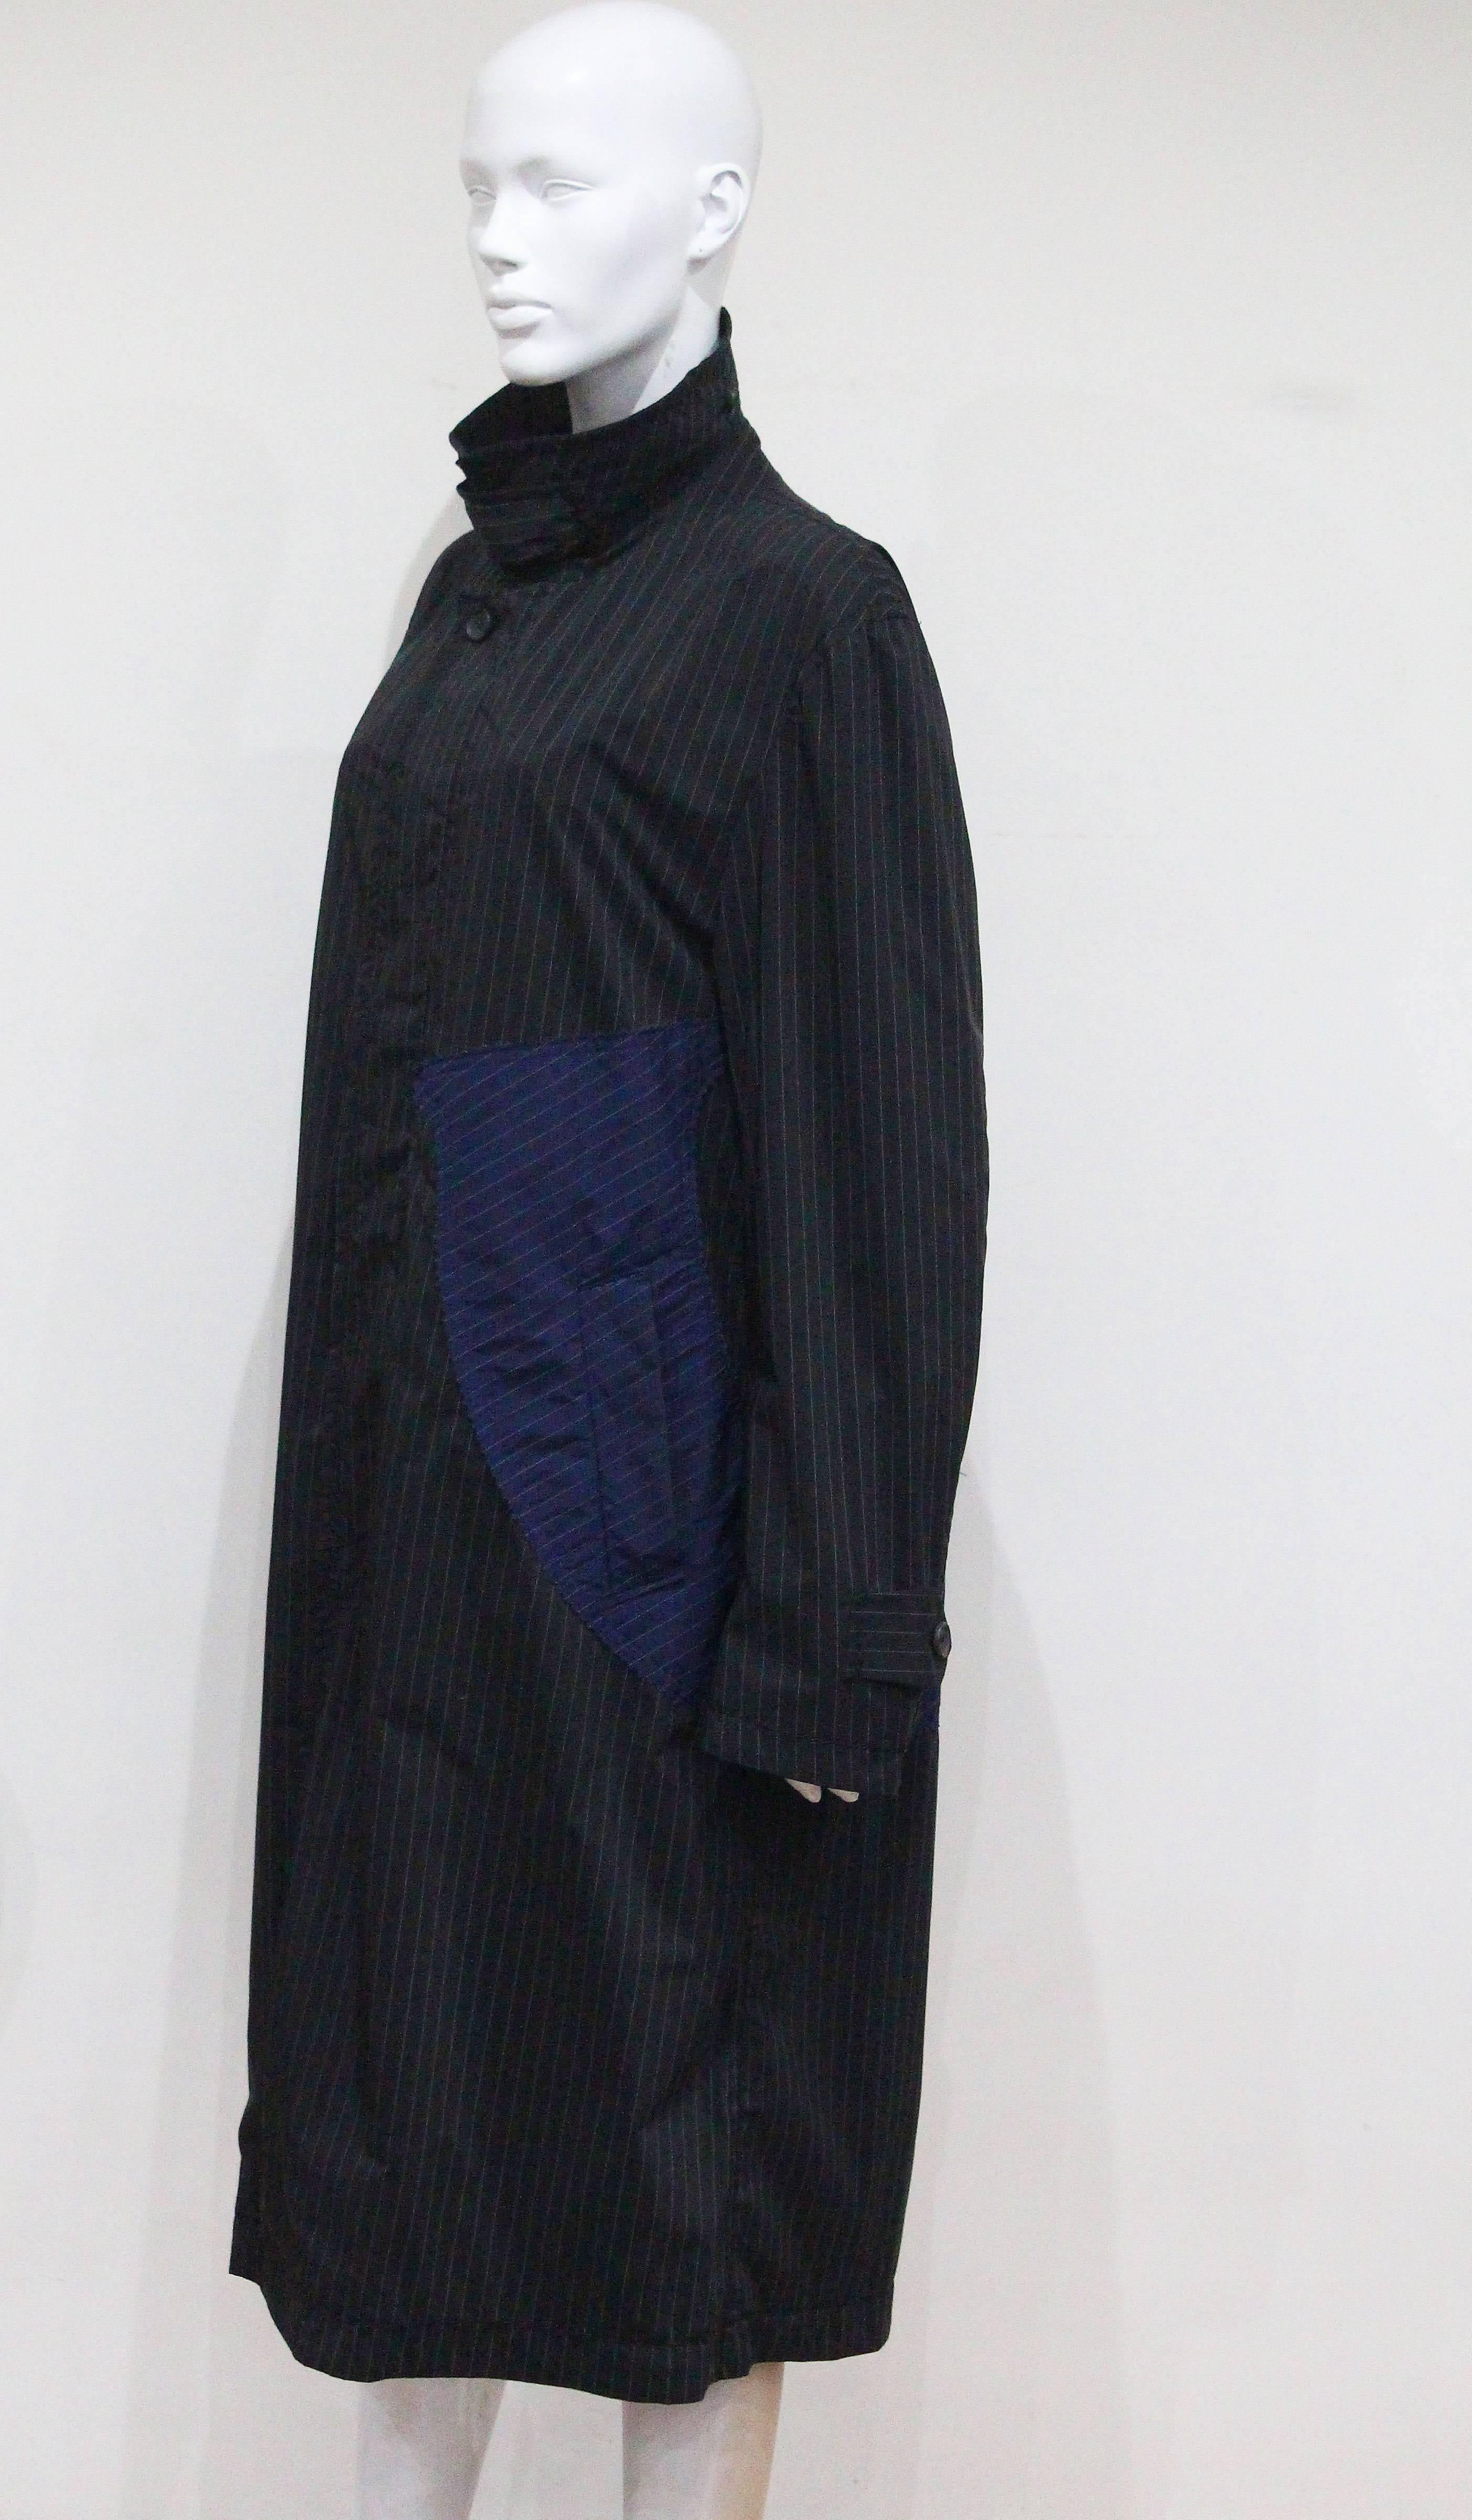 Black Issey Miyake pinstripe windbreaker coat, c. 1990s